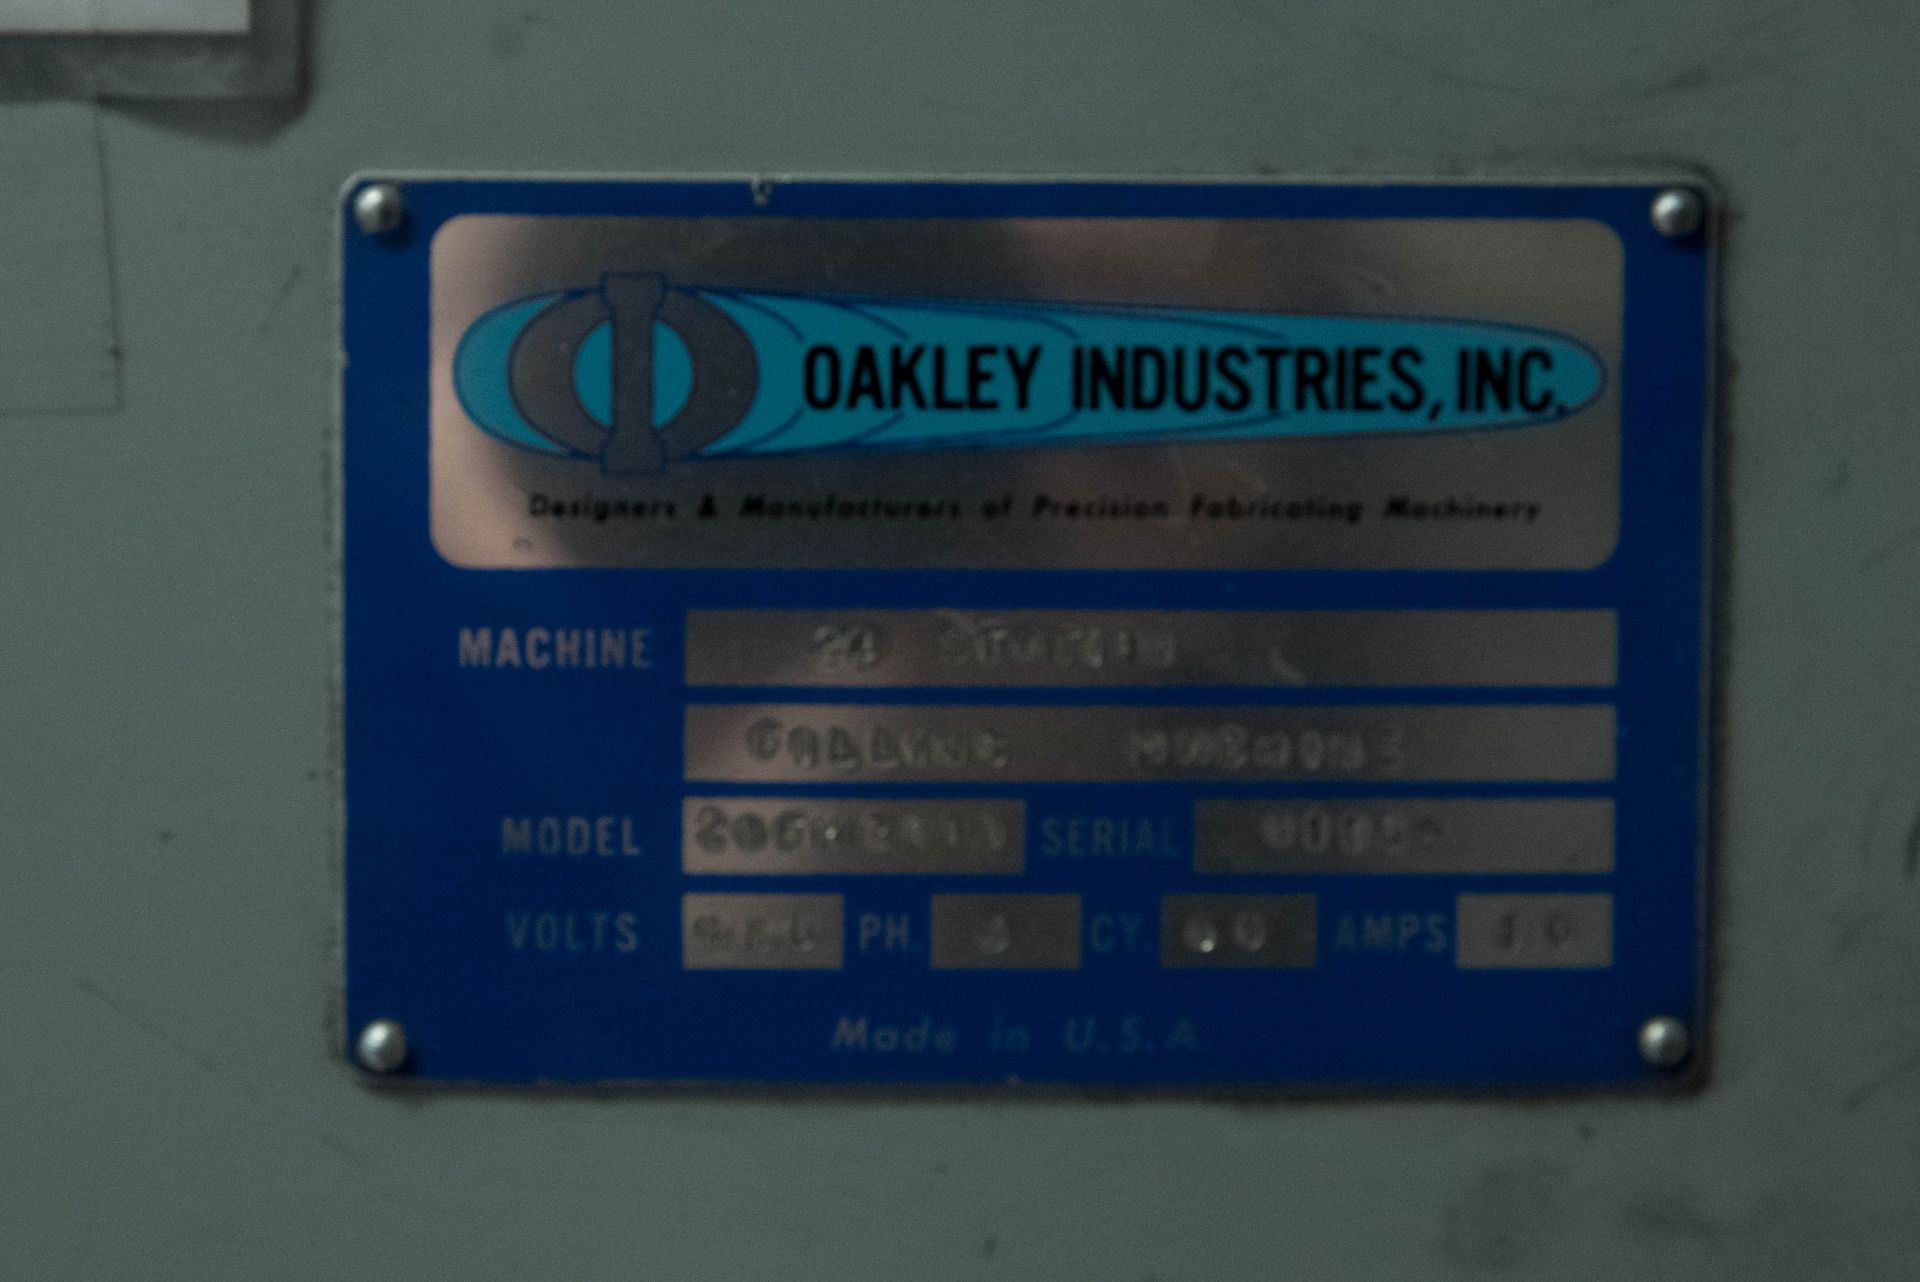 Oakley Industries Mdl: 24FM2000 24 Station Jetless Fast Filling Machine, S/N: 41136 - Image 2 of 3